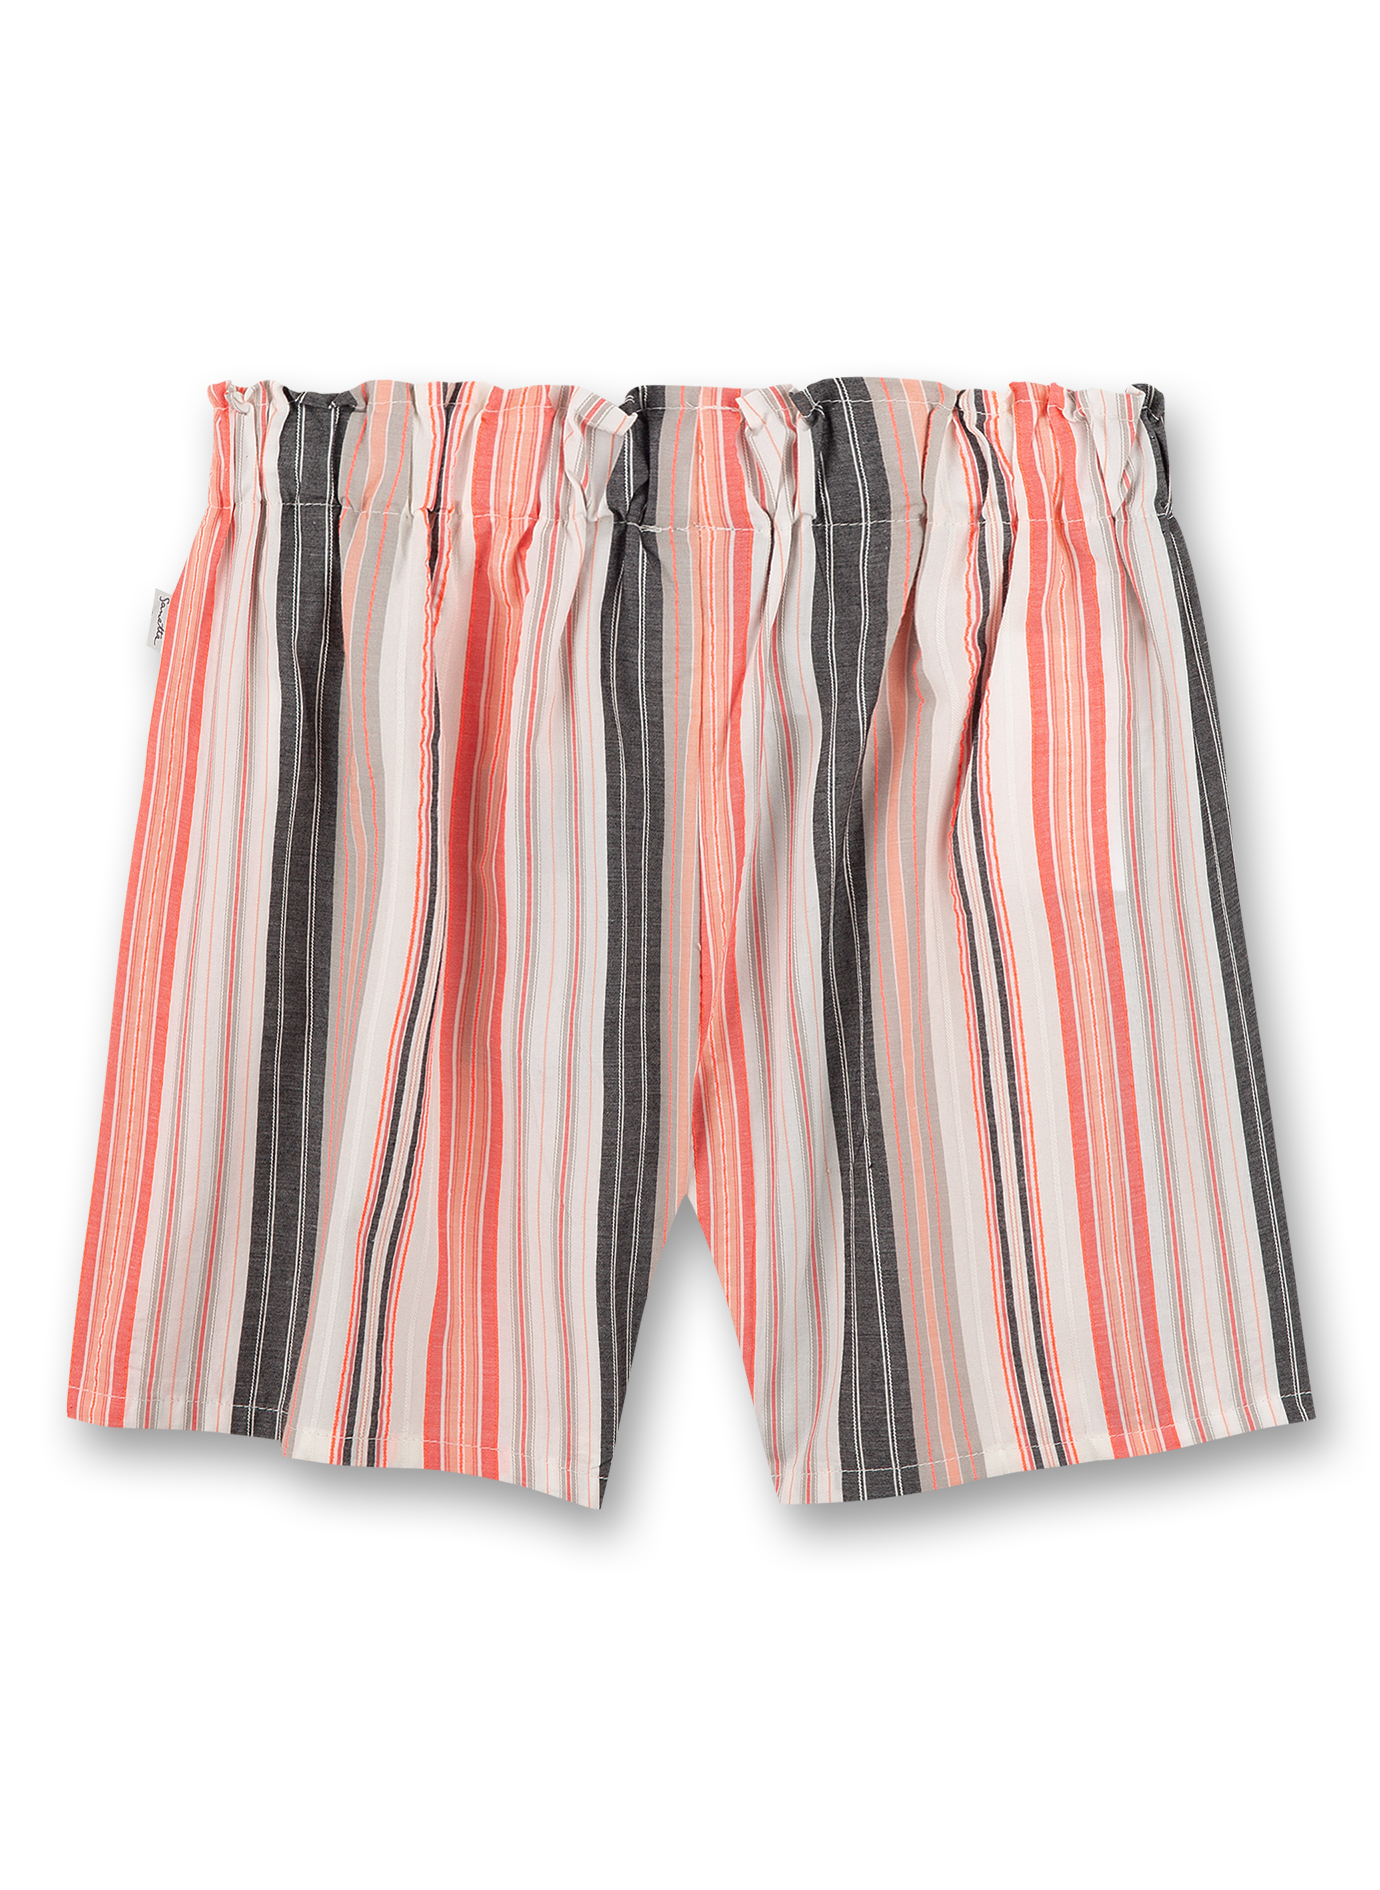 Mädchen-Shorts Off-White gestreift Tropical